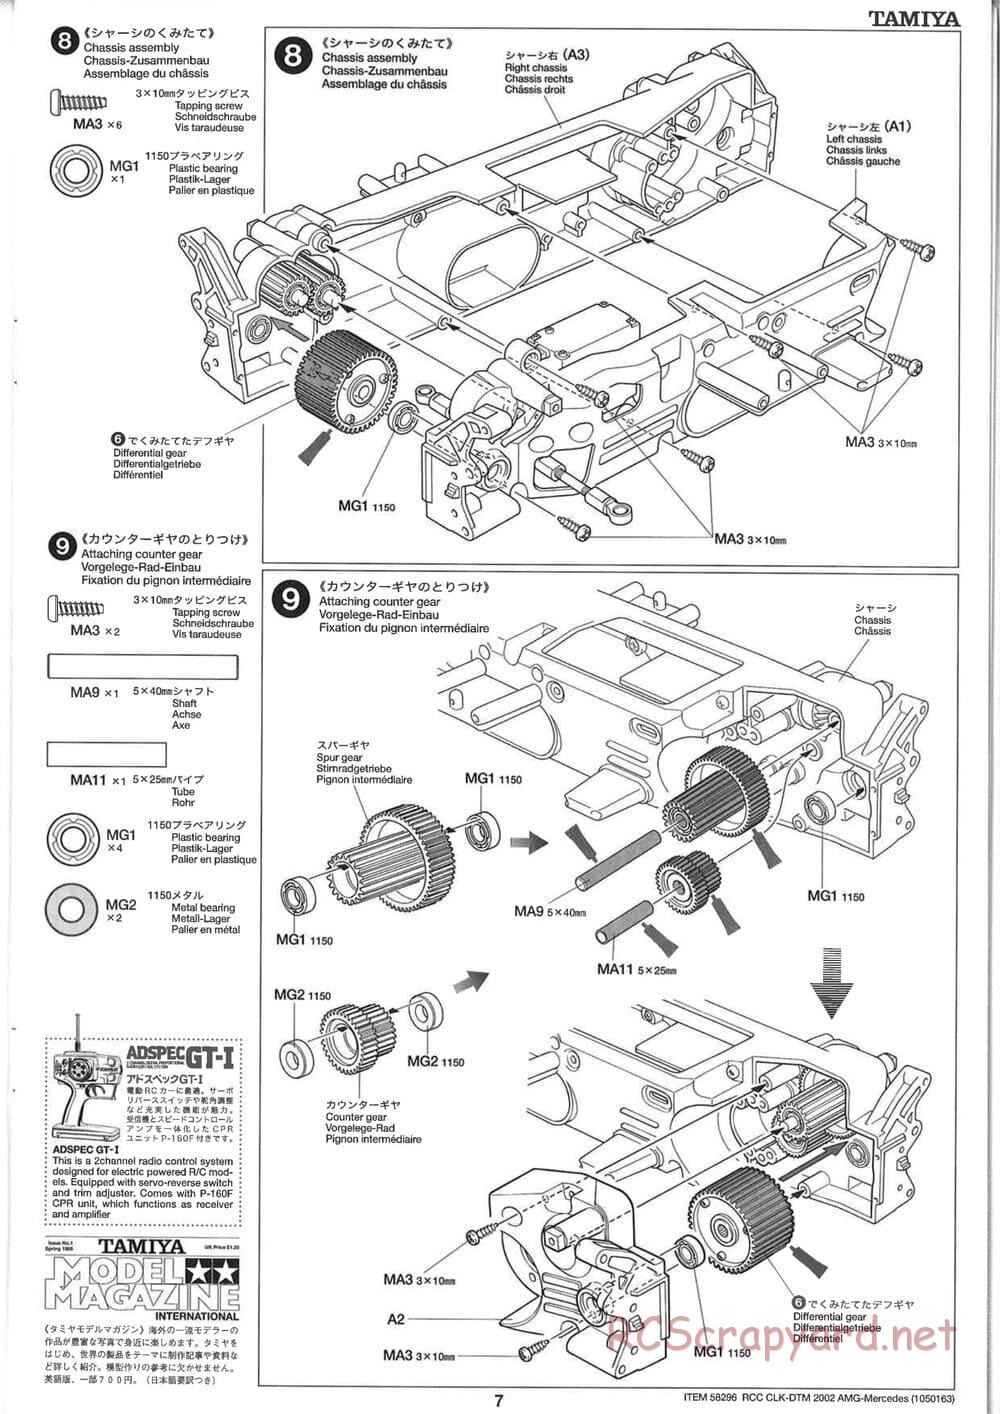 Tamiya - CLK DTM 2002 AMG Mercedes - TL-01 LA Chassis - Manual - Page 7